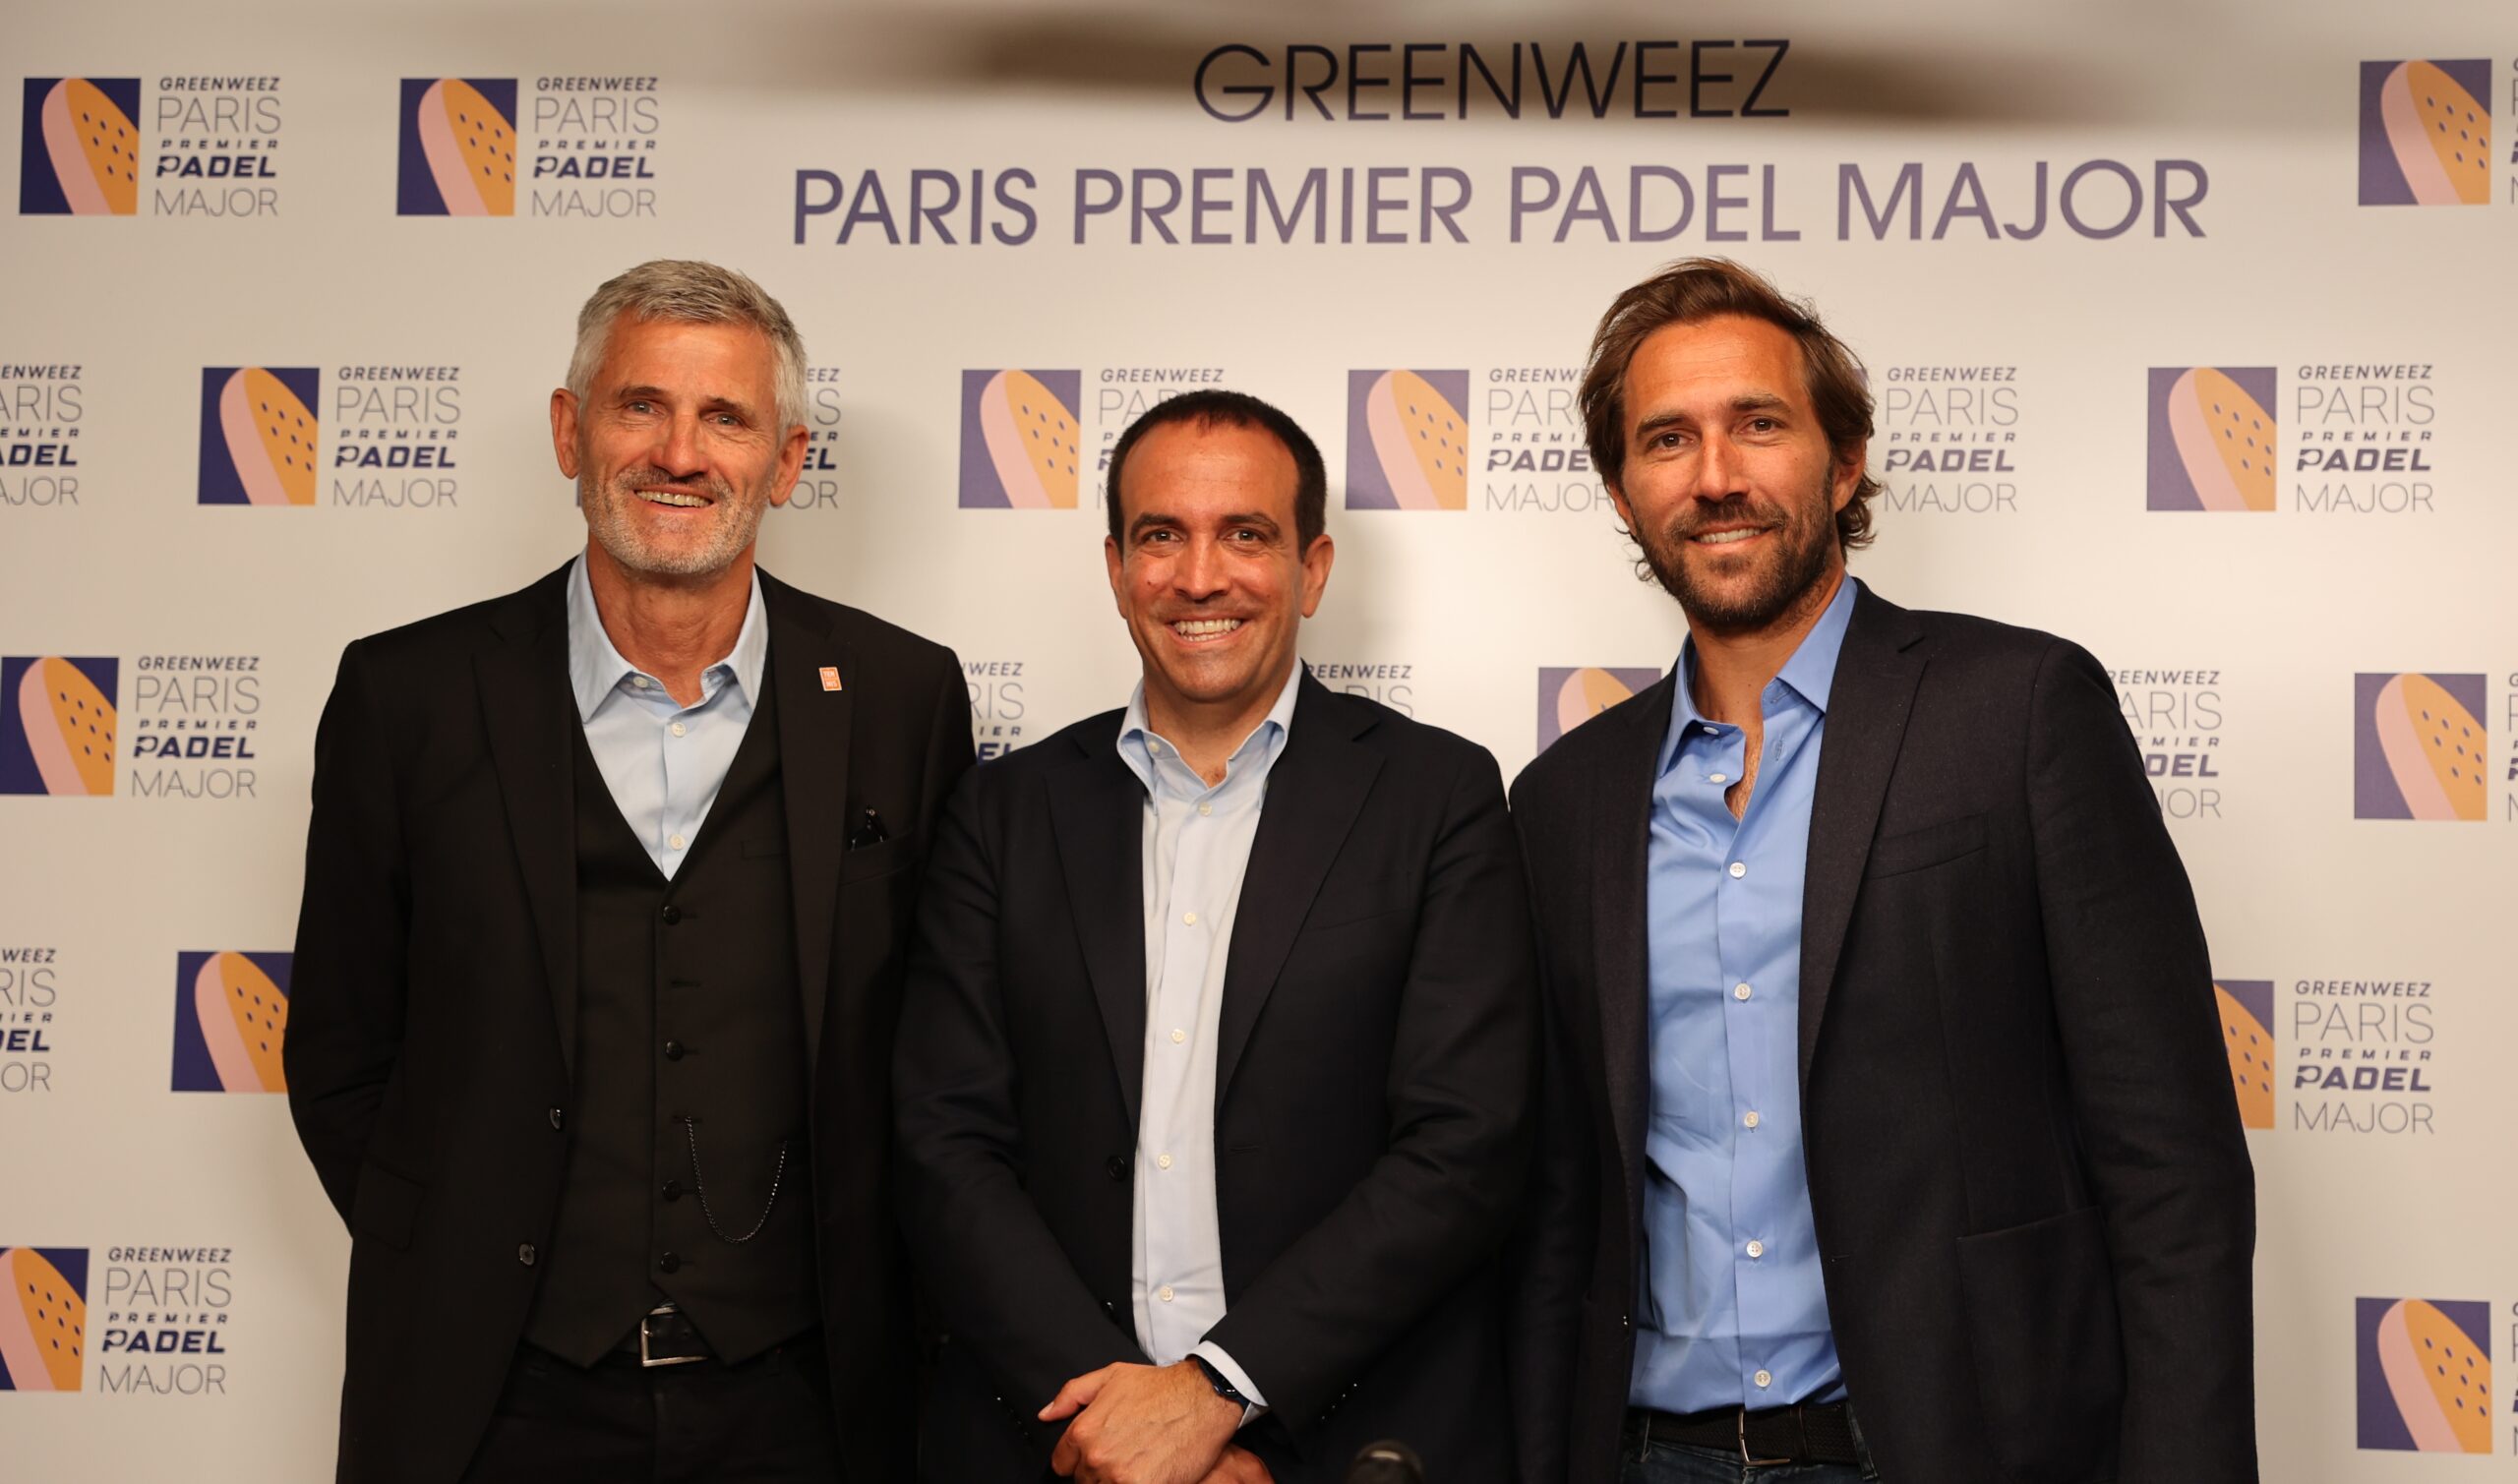 Roland-Garros stadion redo att välkomna Greenweez Paris Premier Padel Major